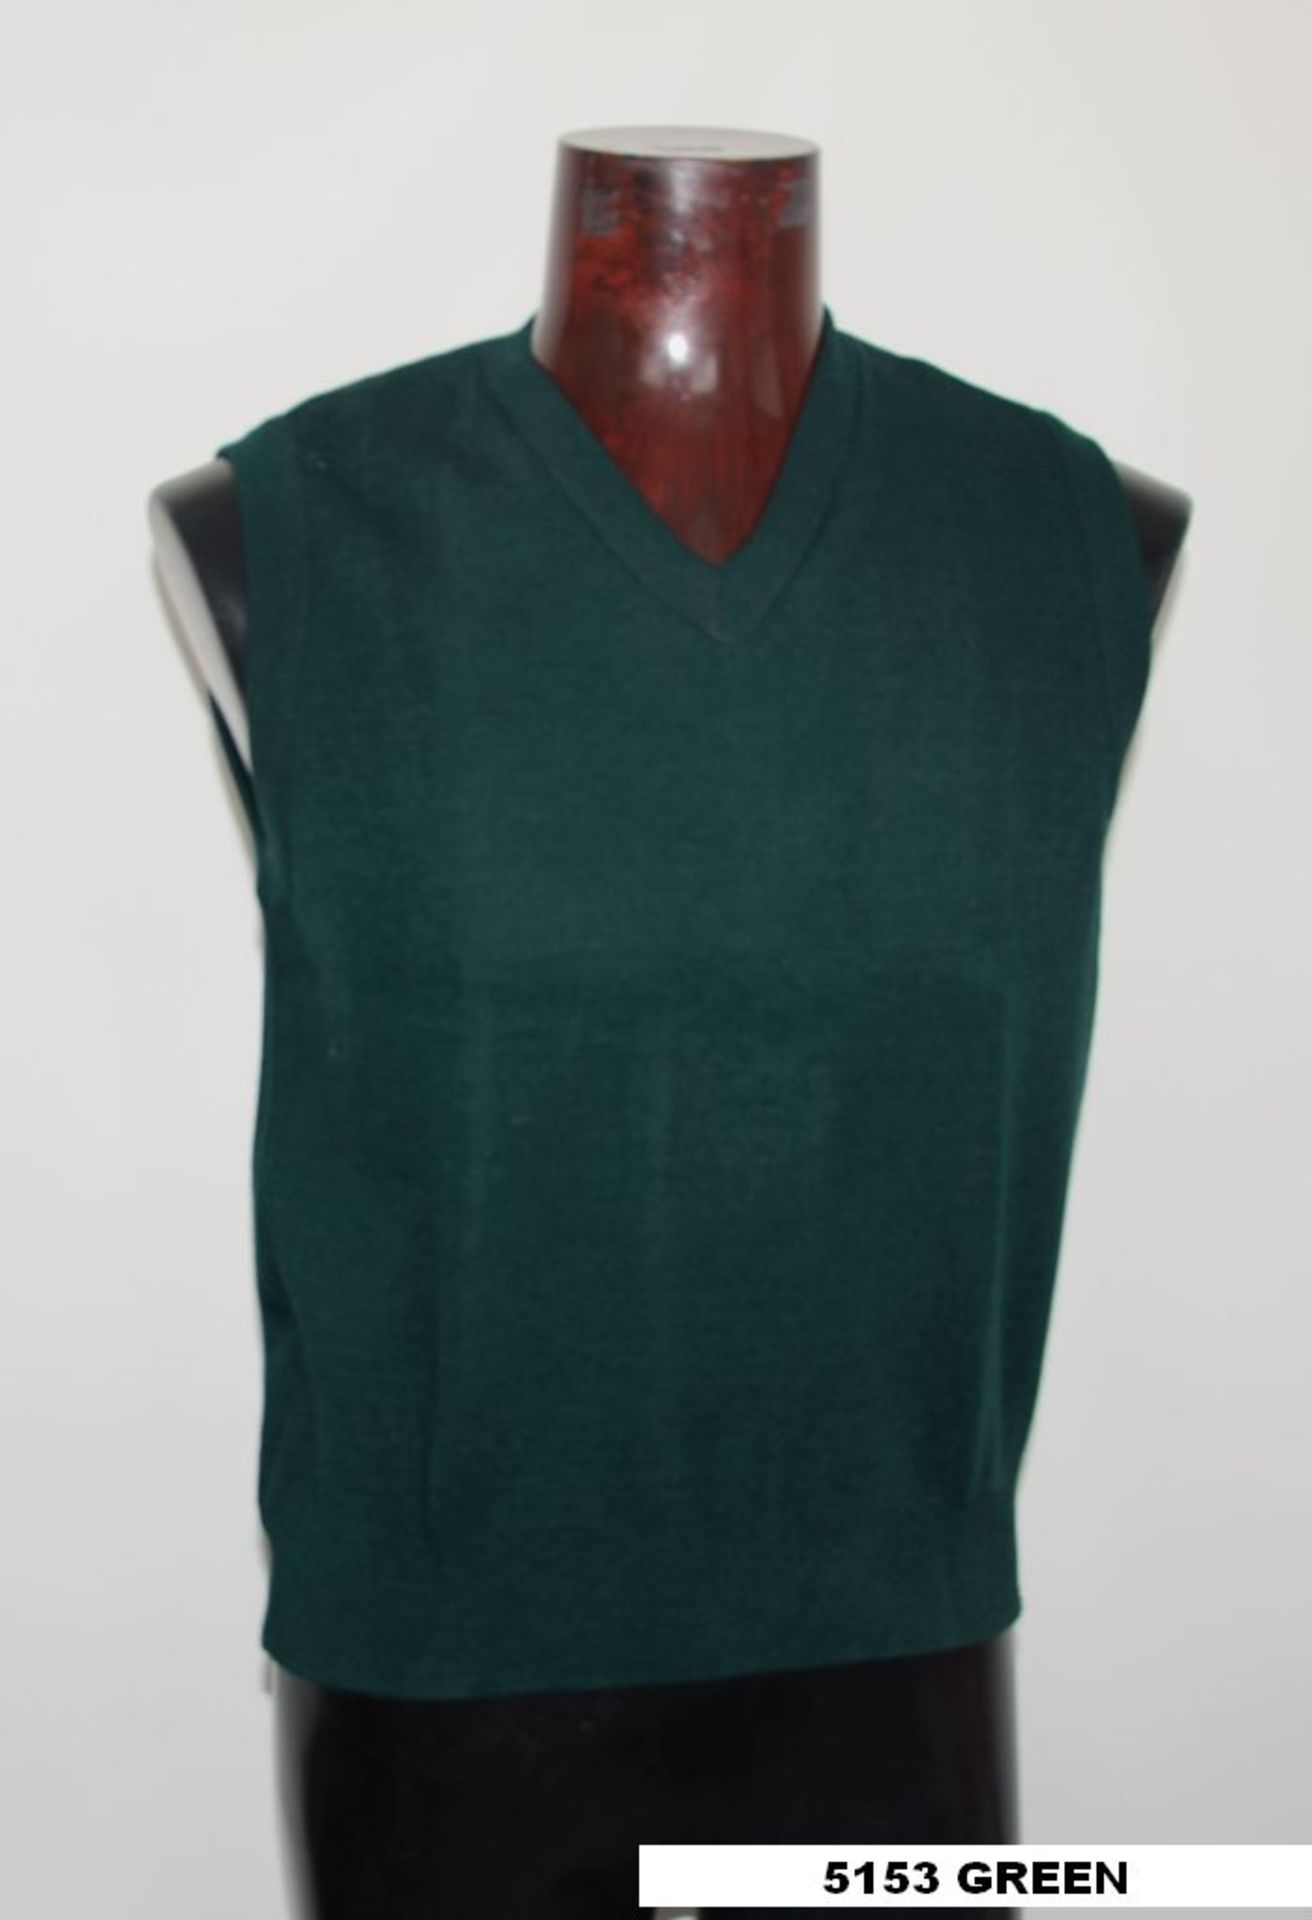 77 x Sweater, V-neck / Black / 5153 BA - Image 2 of 2